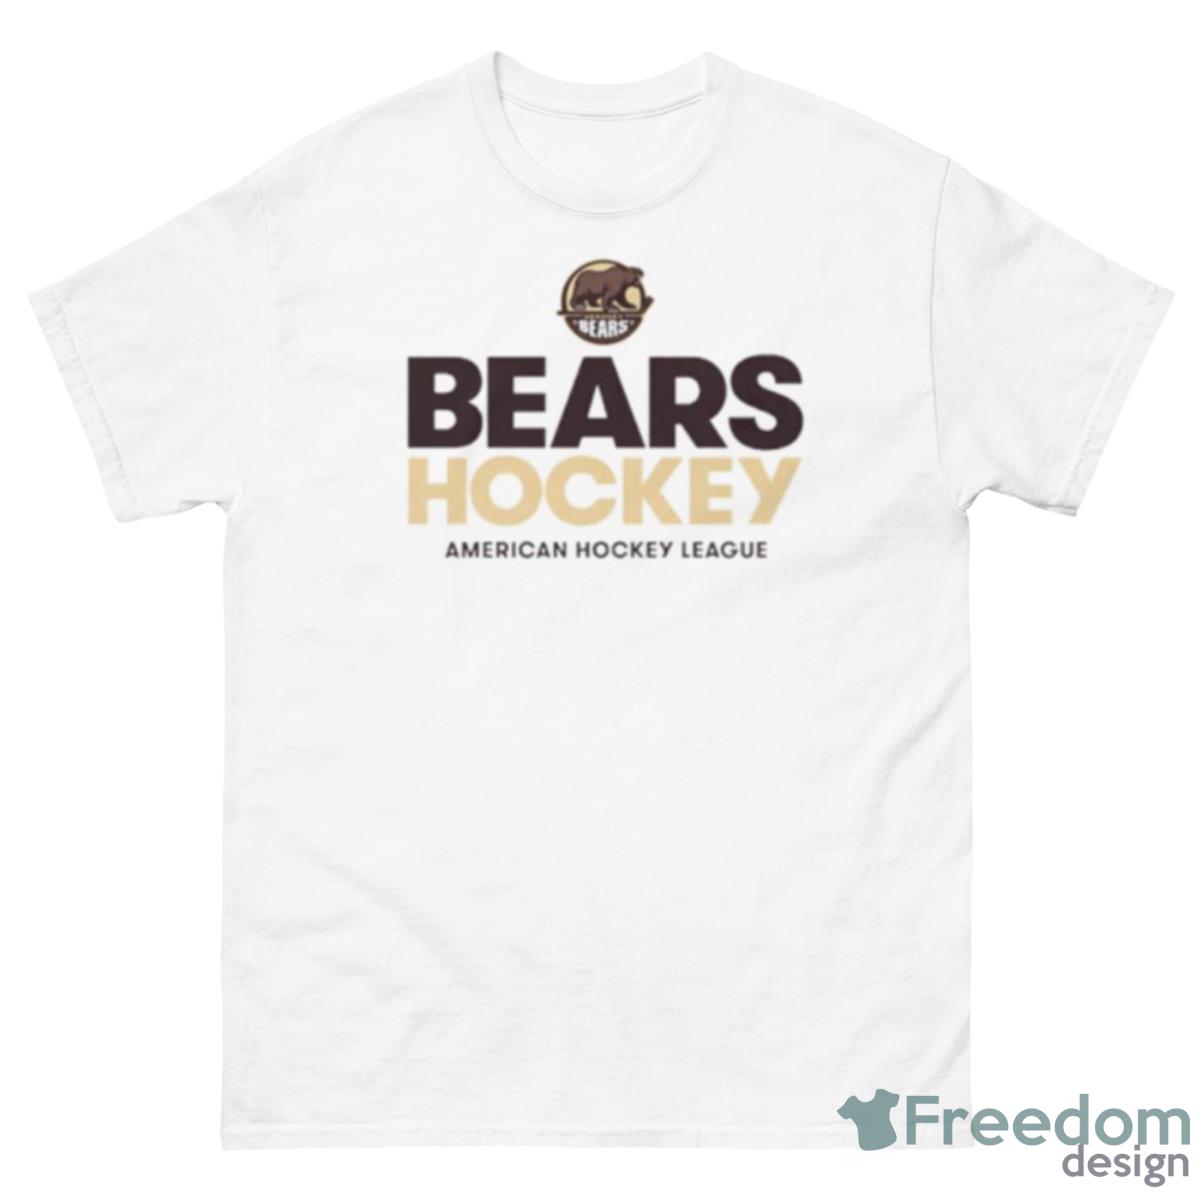 Hershey Bears Hockey American Hockey League Shirt - Freedomdesign